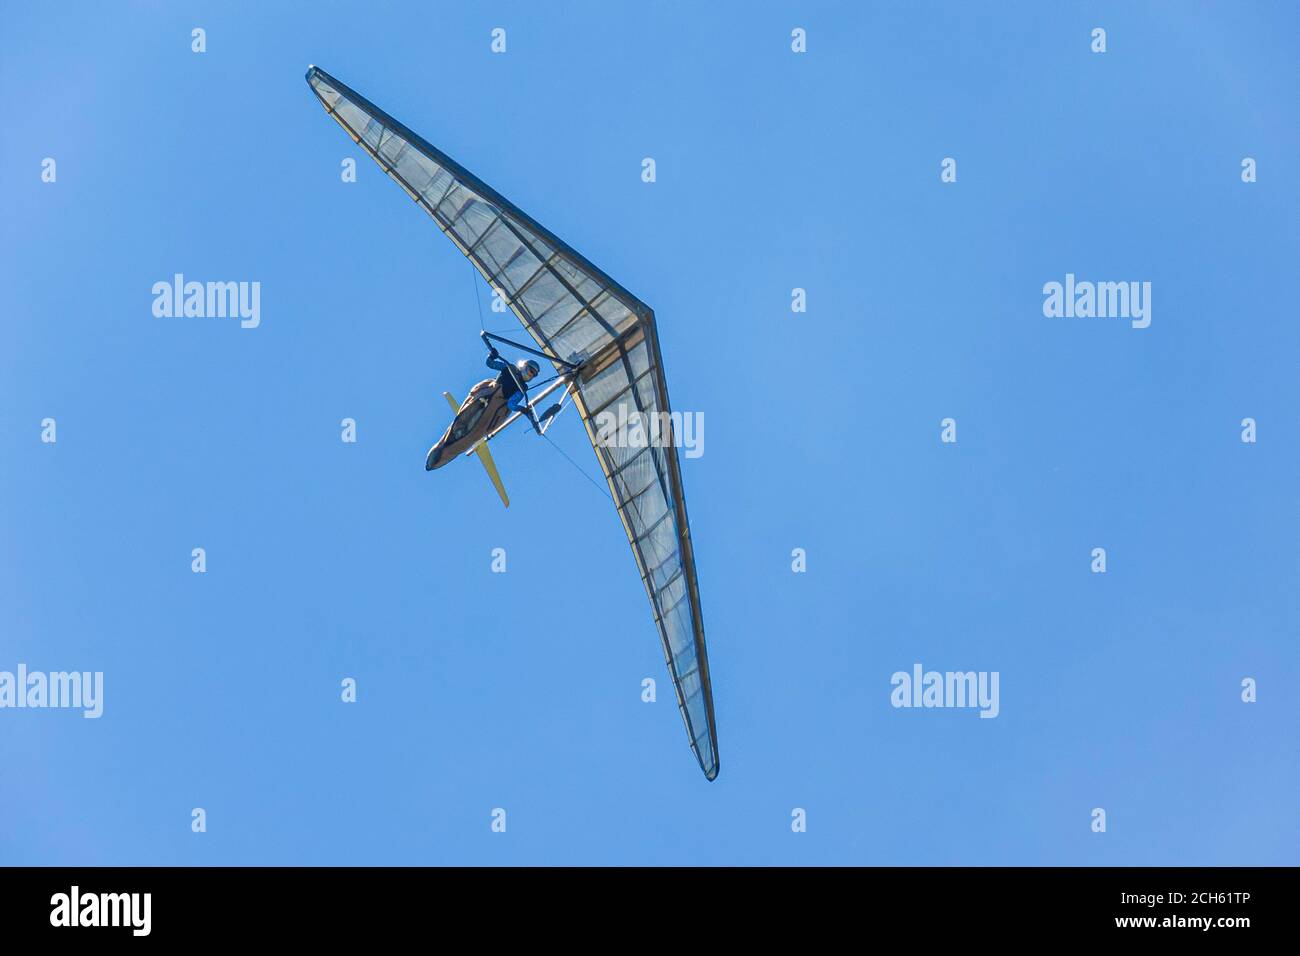 Hang glider wing silhouette. Sport hangglider wing making maneuvers Stock Photo